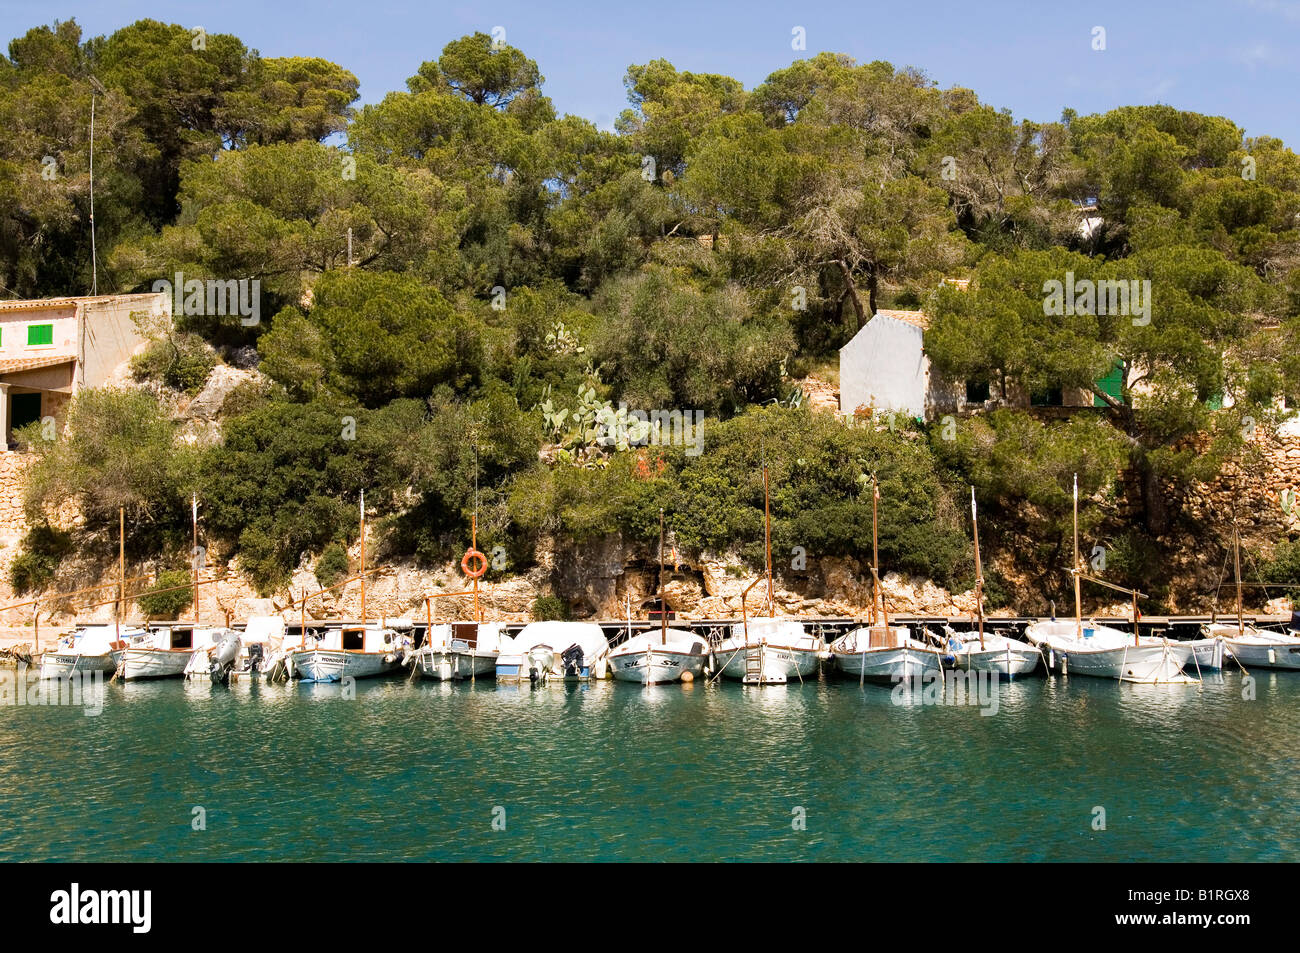 Cala Fuguera Bay, fishing boats in front of trees, Cala Figuera, Majorca, Balearic Islands, Spain, Europe Stock Photo